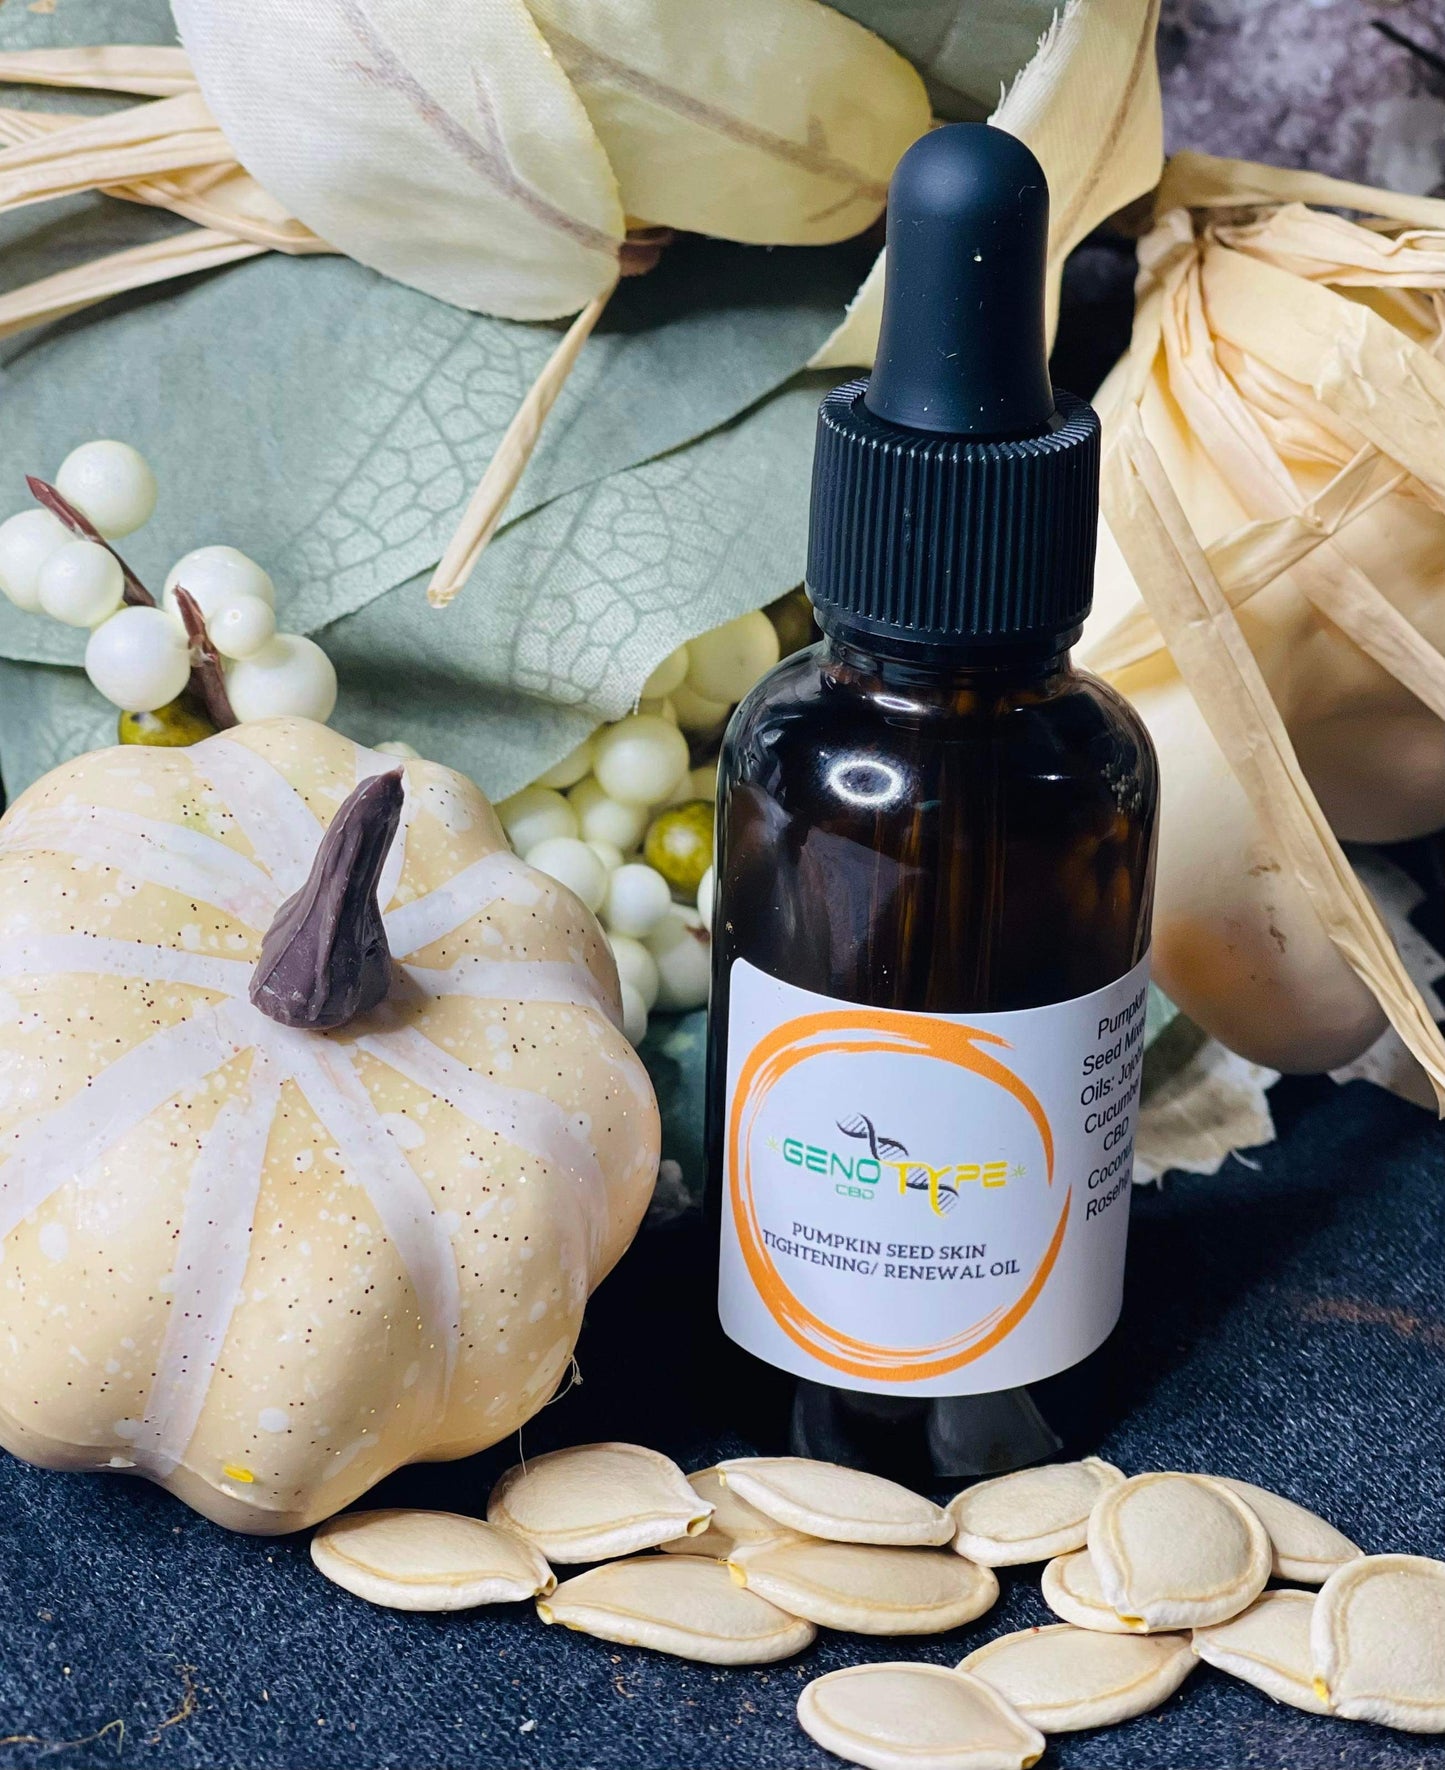 Pumpkin Seed Skin Tightening/Skin Renewal Oil